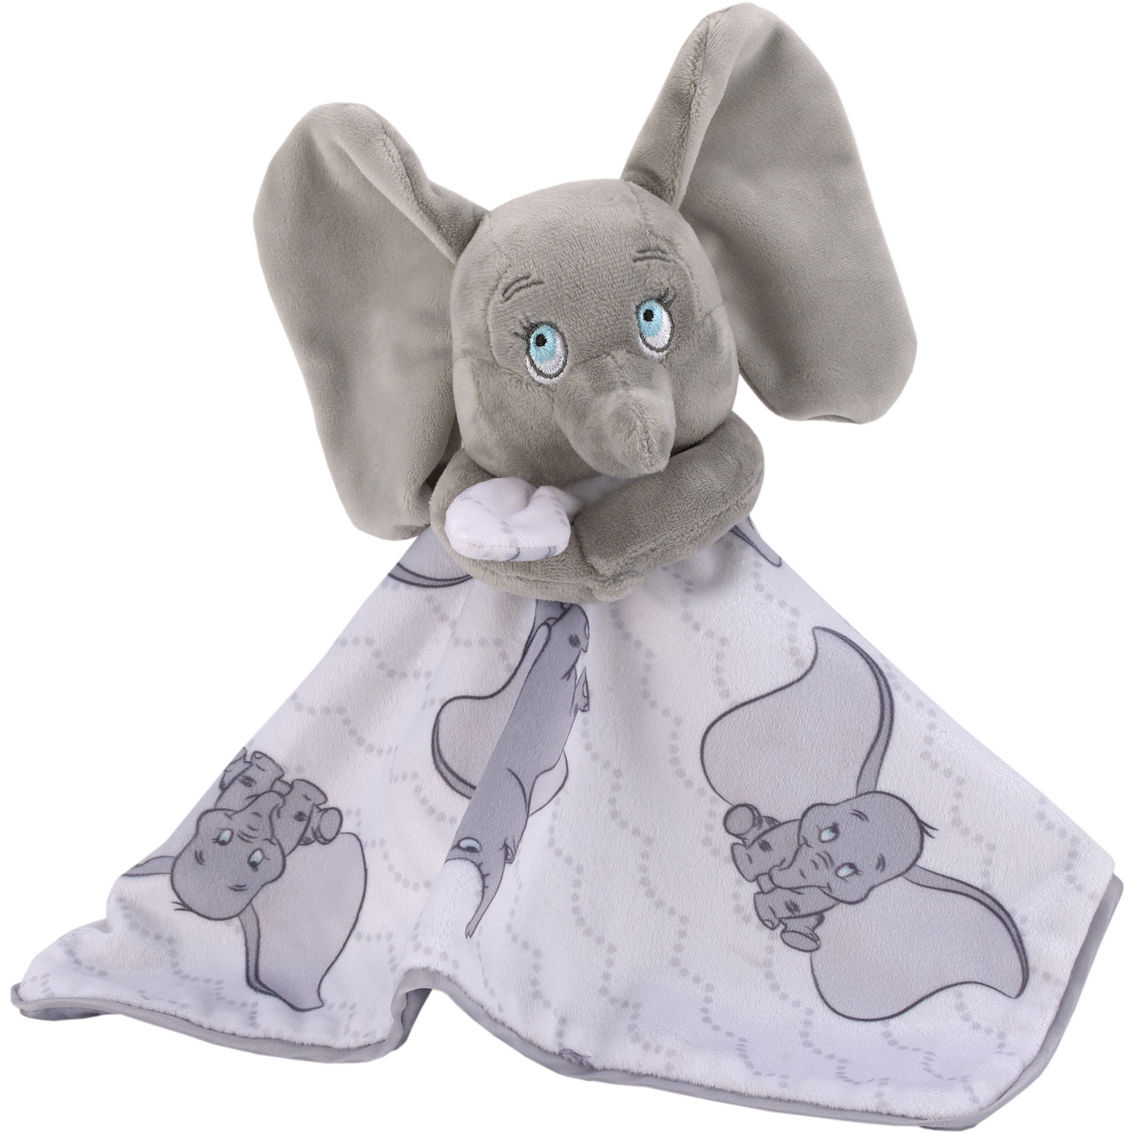 Disney Dumbo Baby Blanket and Security Blanket 2 pc. Set - Image 2 of 5